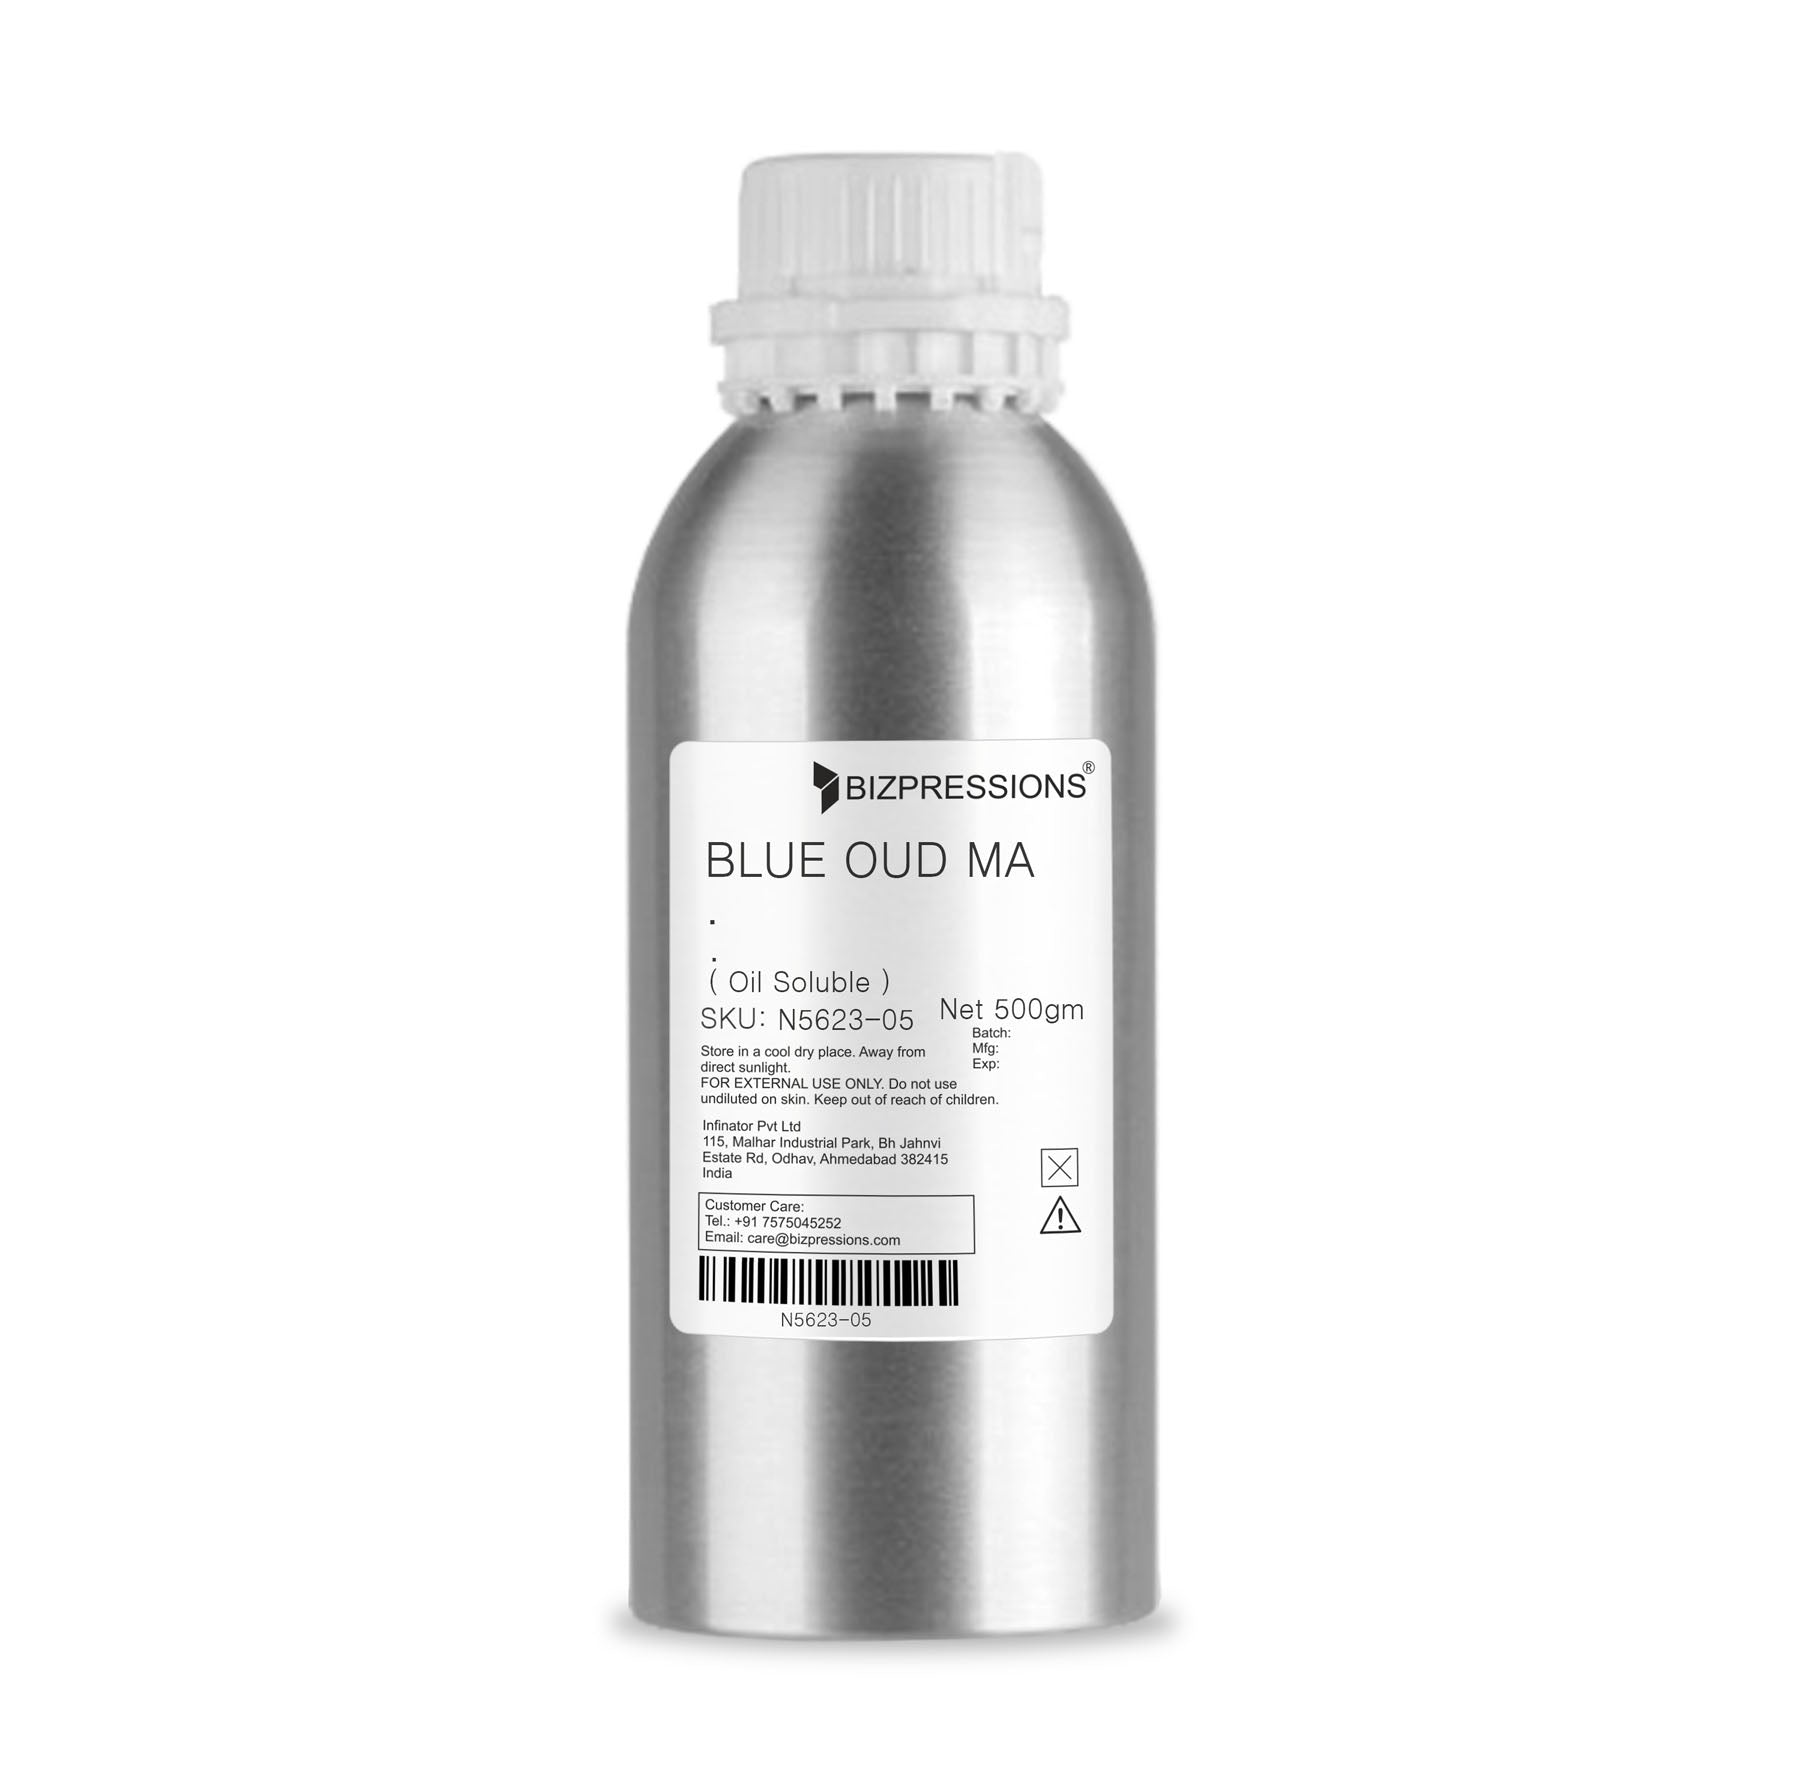 BLUE OUD MA - Fragrance ( Oil Soluble ) - 500 gm